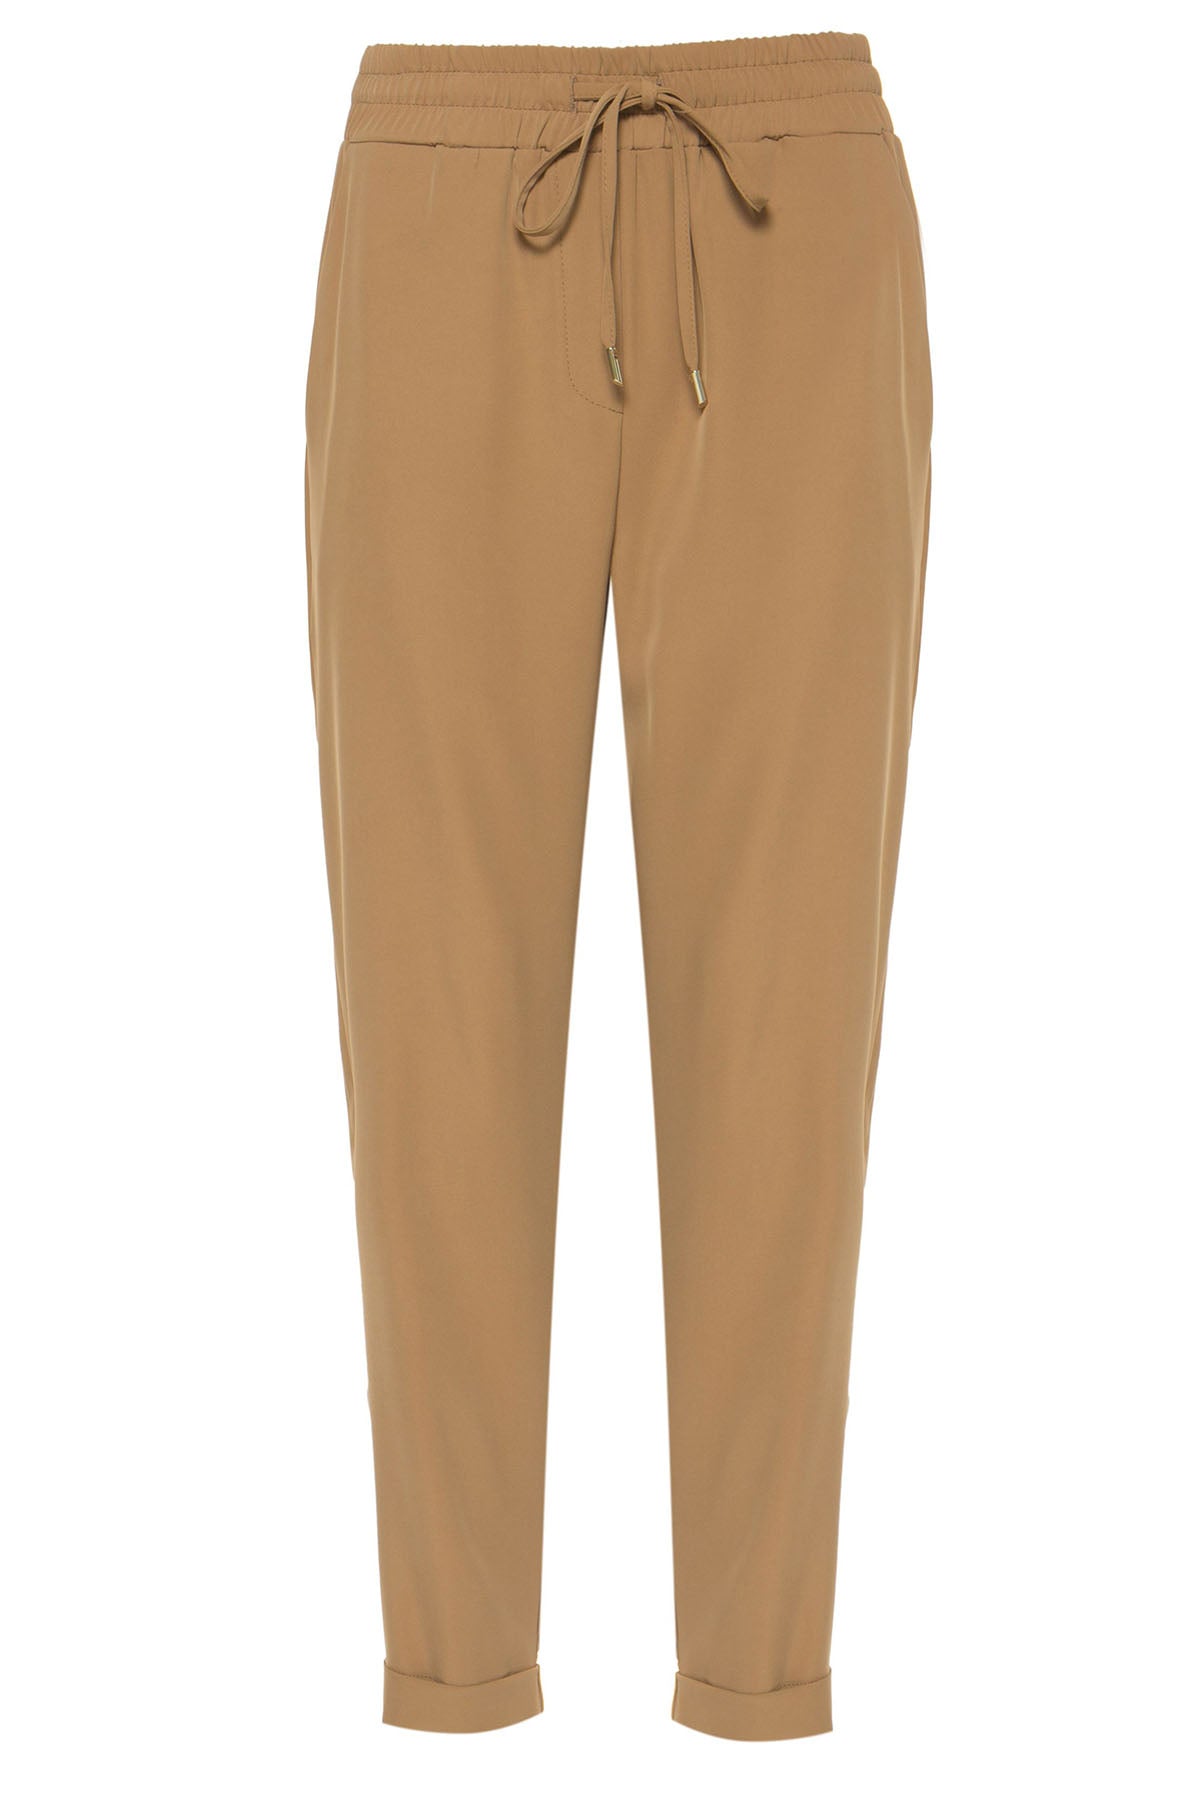 Bsb Beli Lastikli Yüksek Bel Pantolon-Libas Trendy Fashion Store